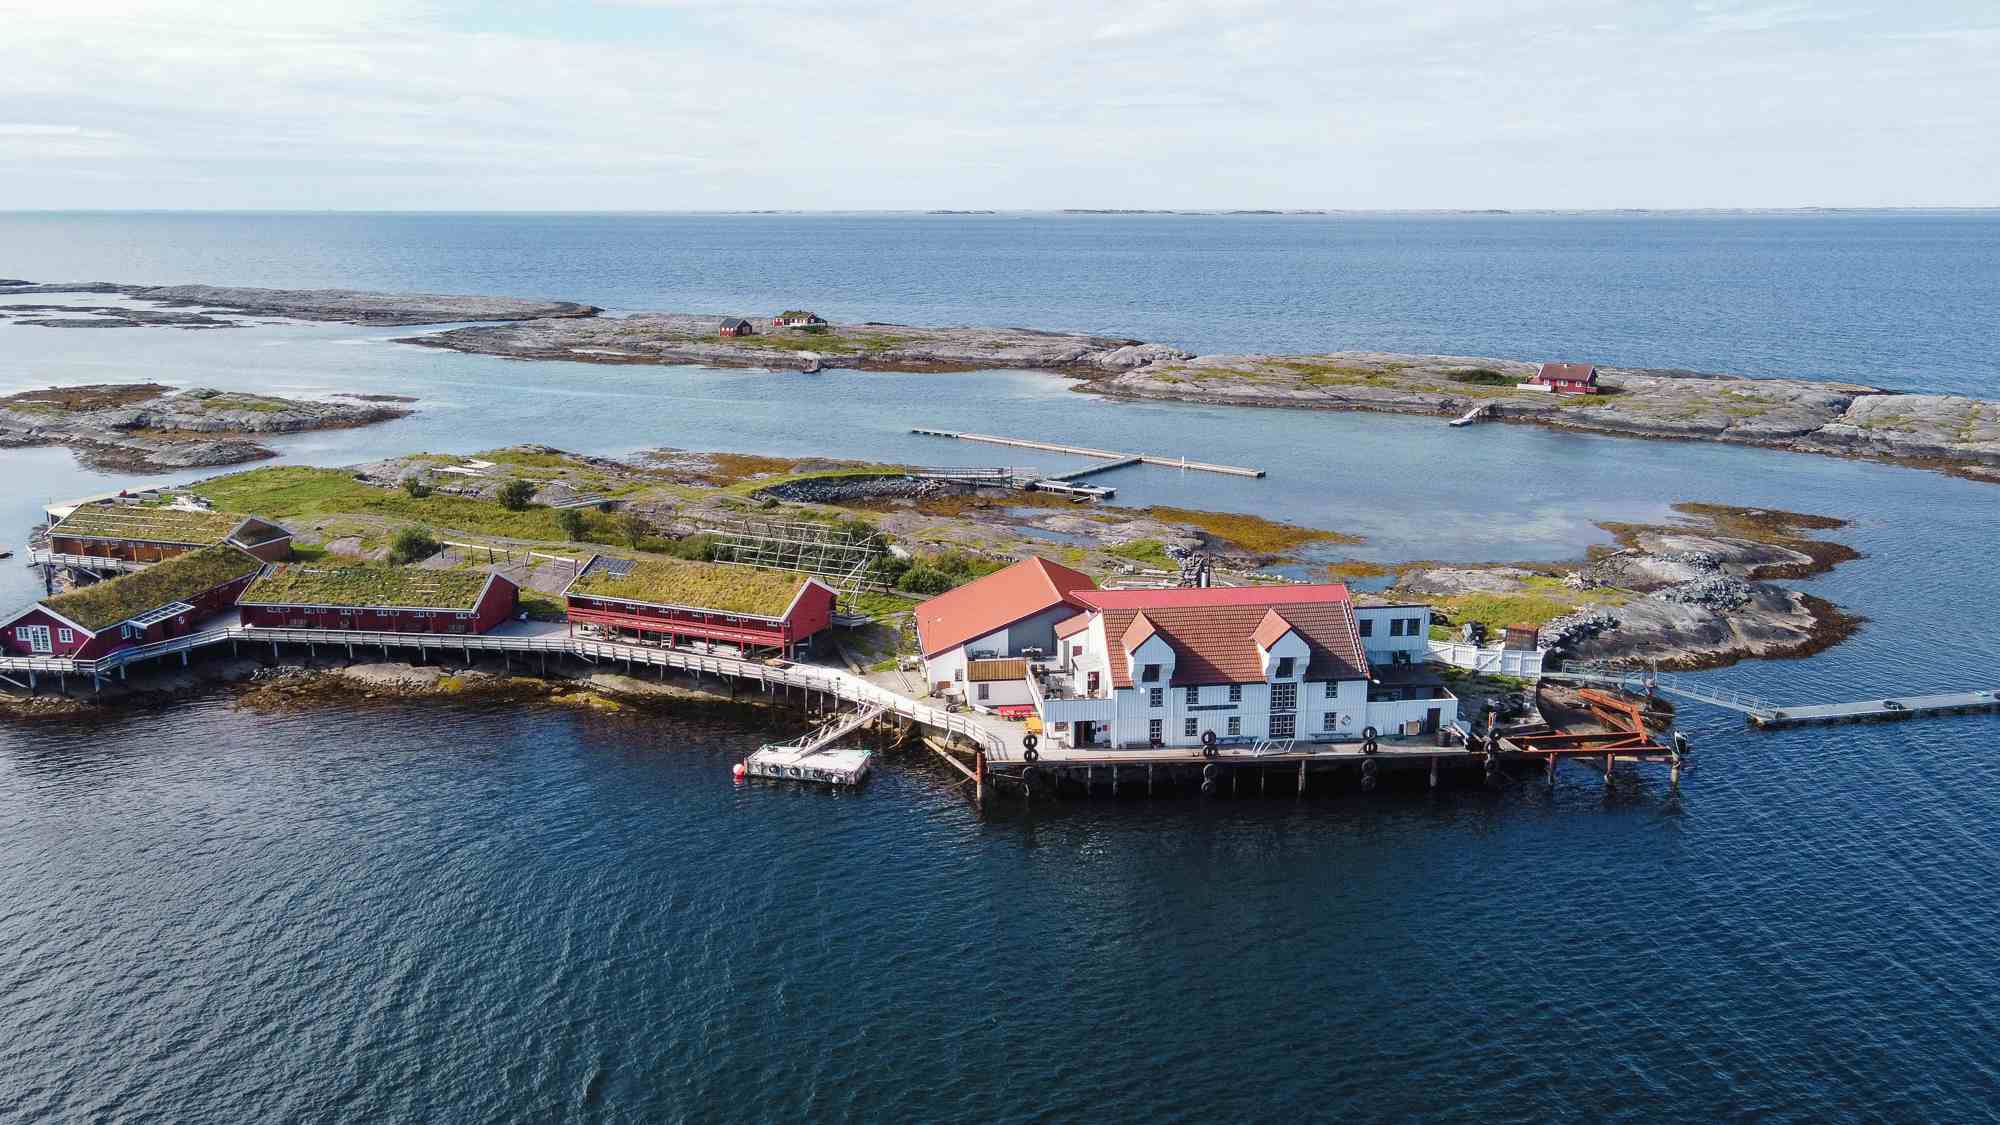 Øya Ringholmen i all sin prakt